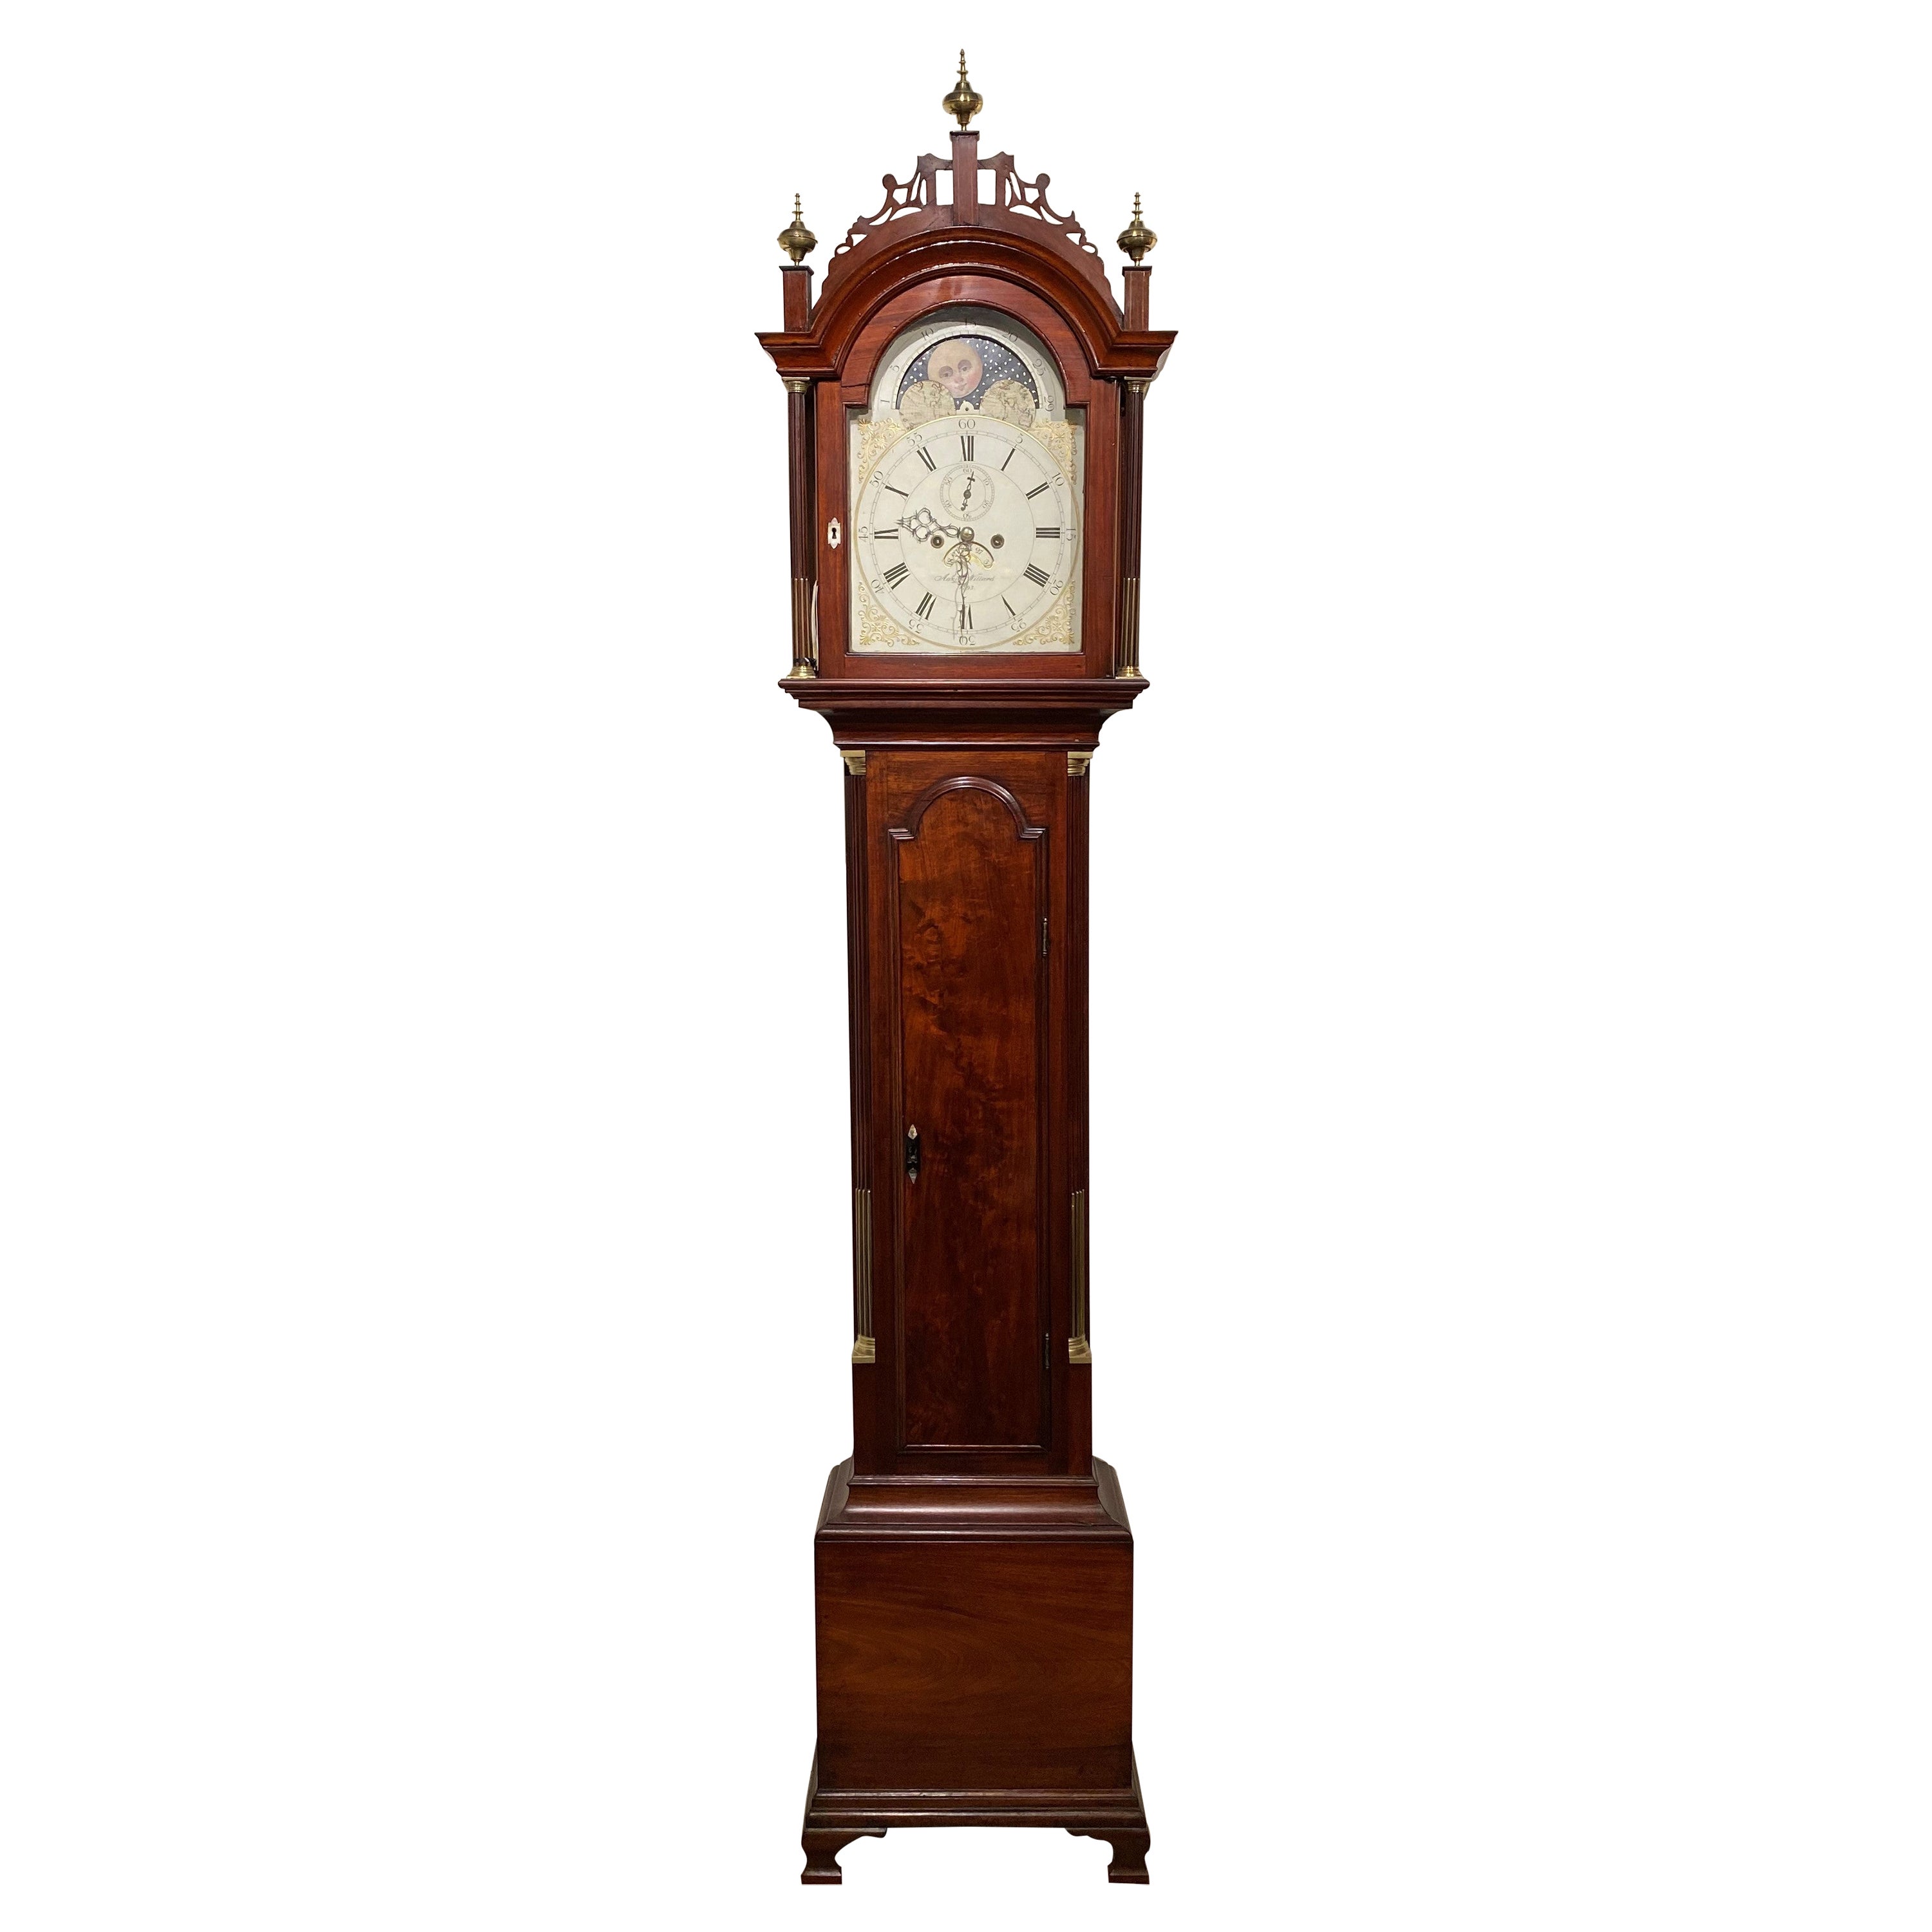 Aaron Willard Mahogany Tall Case Clock with Moon Phase Dial 1793